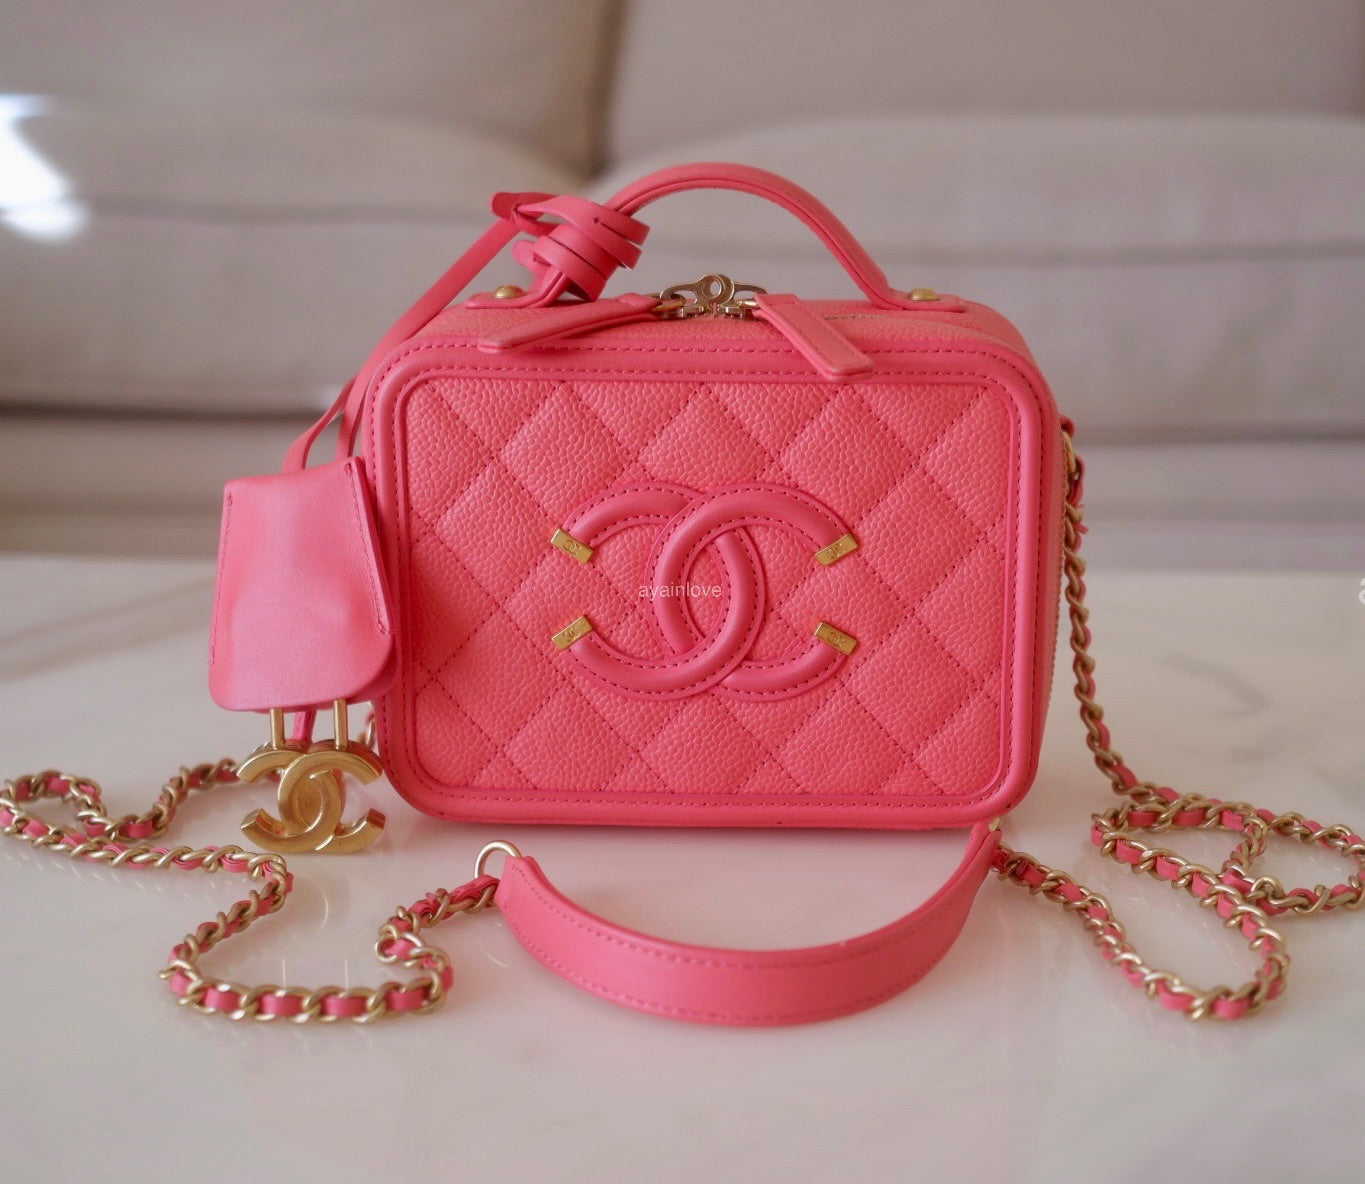 Chanel Small Filigree Vanity Case - Black Crossbody Bags, Handbags -  CHA948446